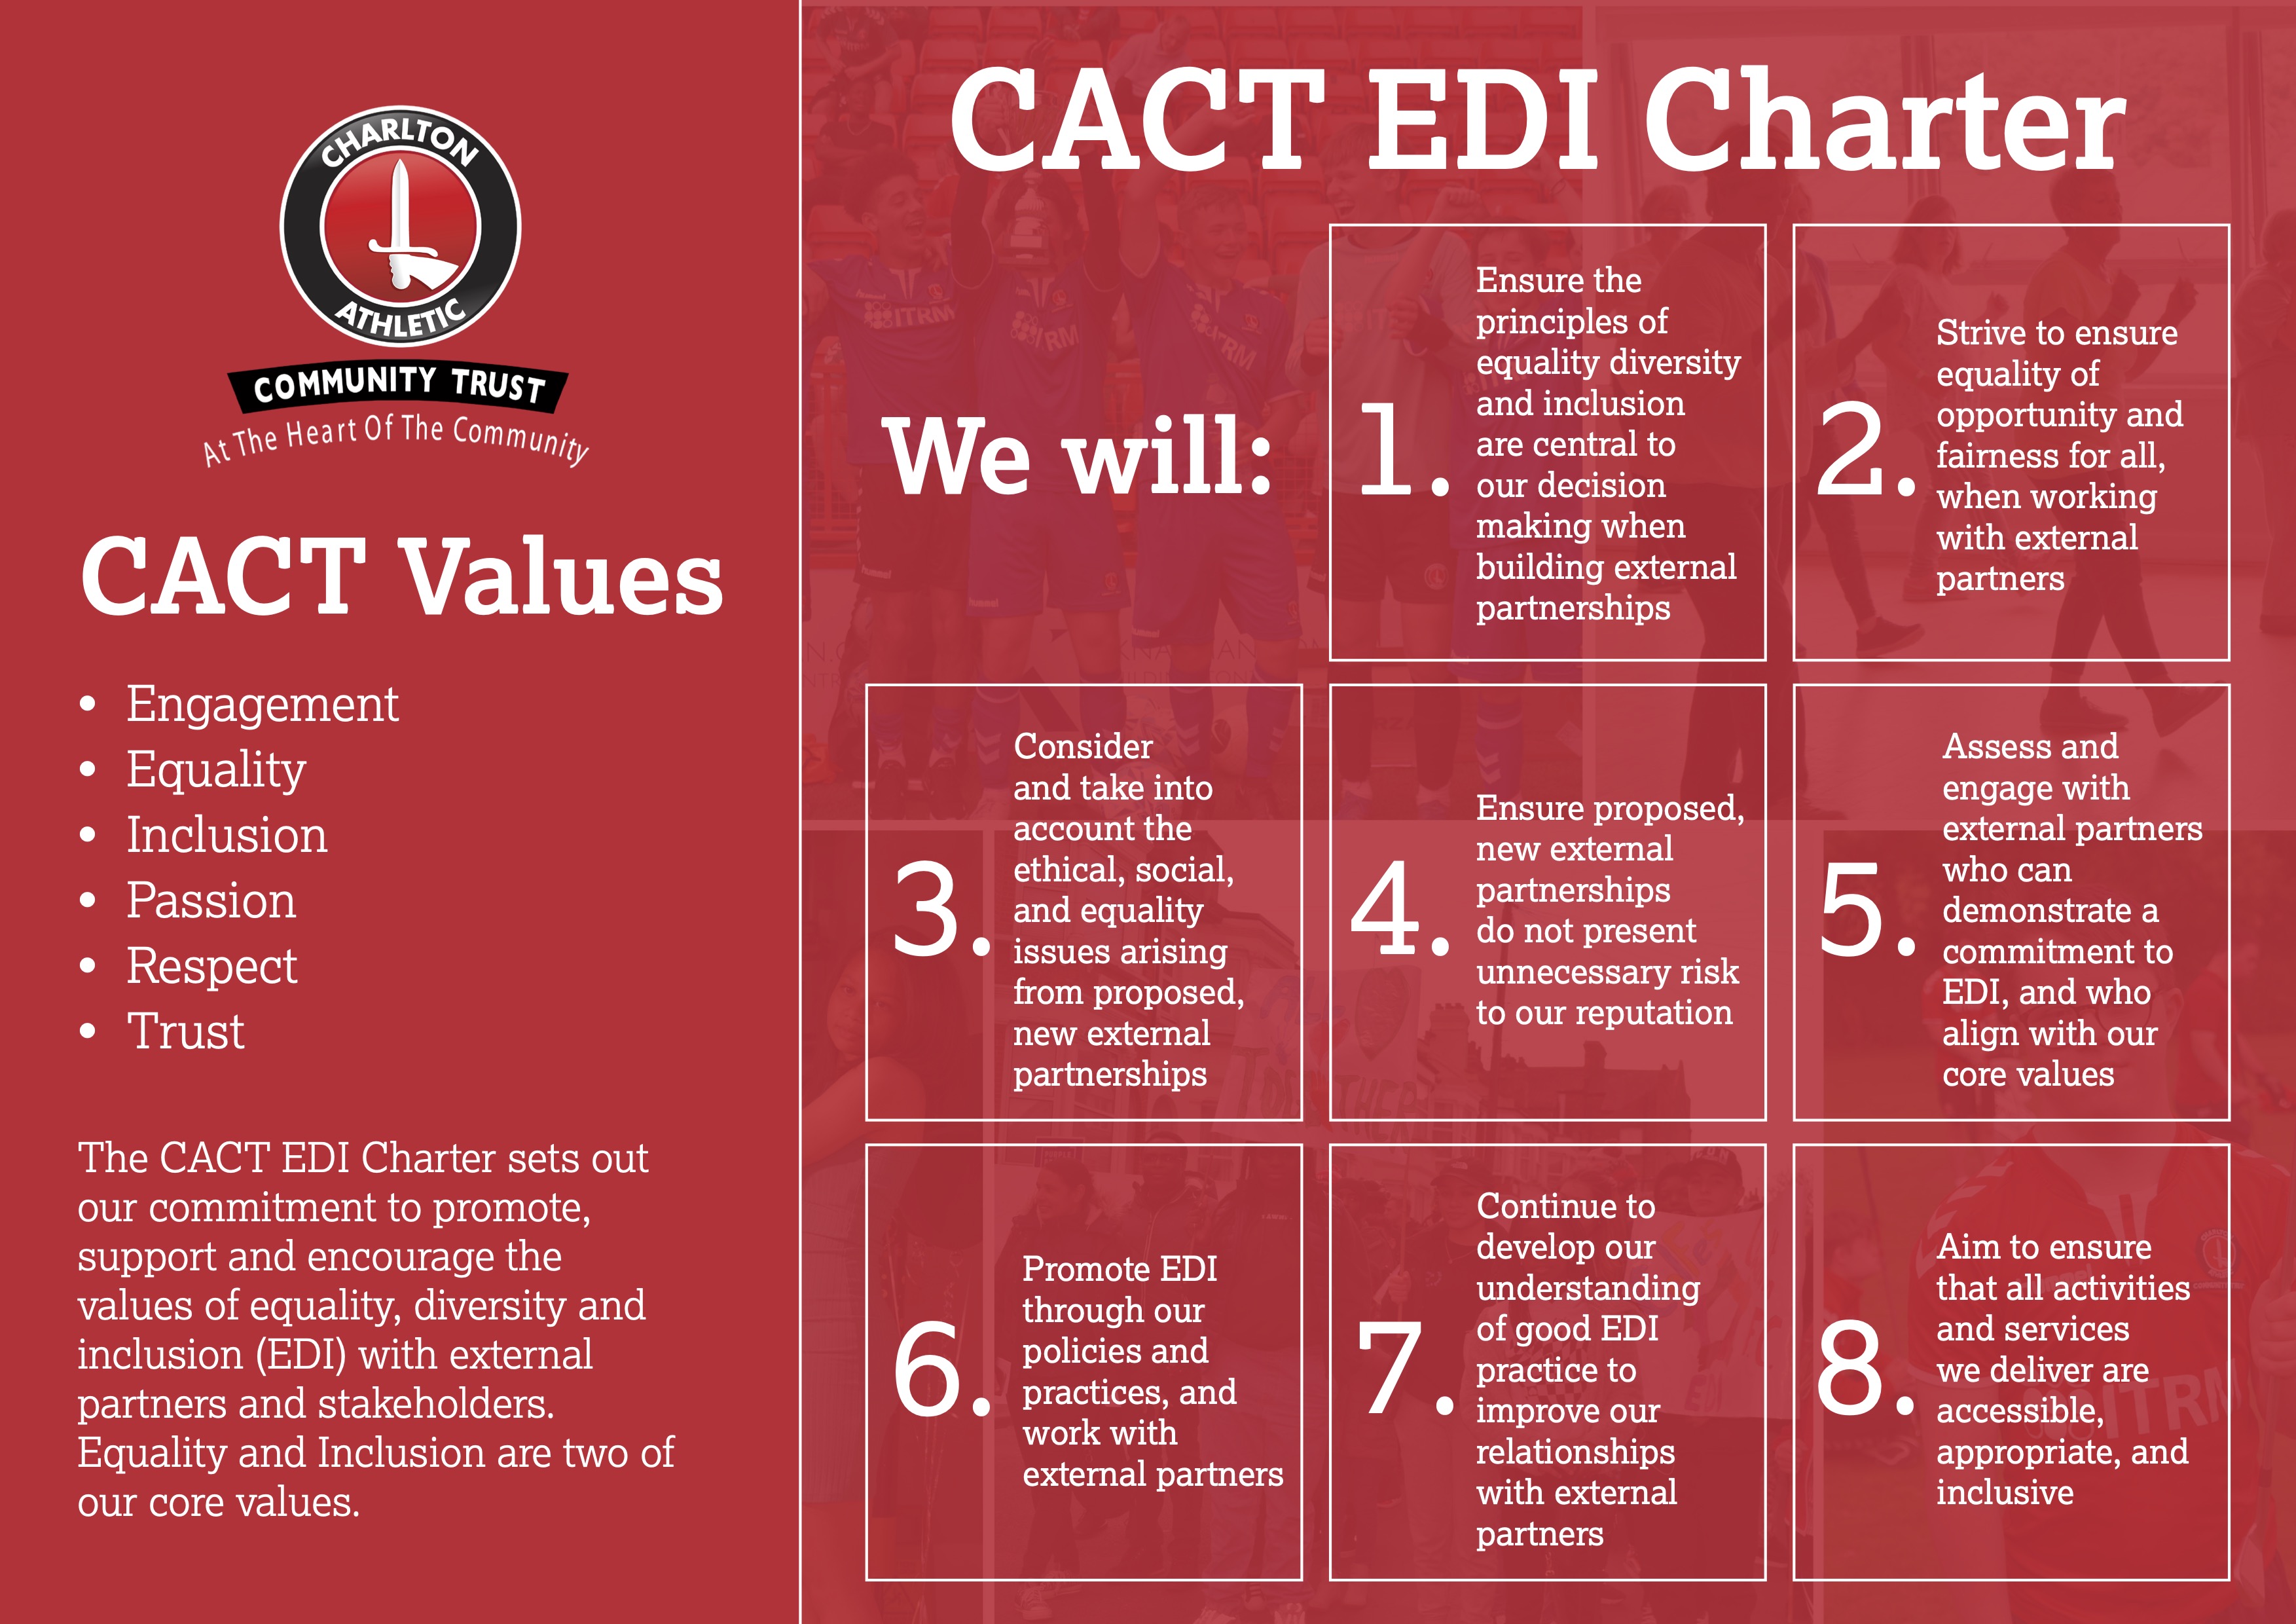 CACT EDI charter